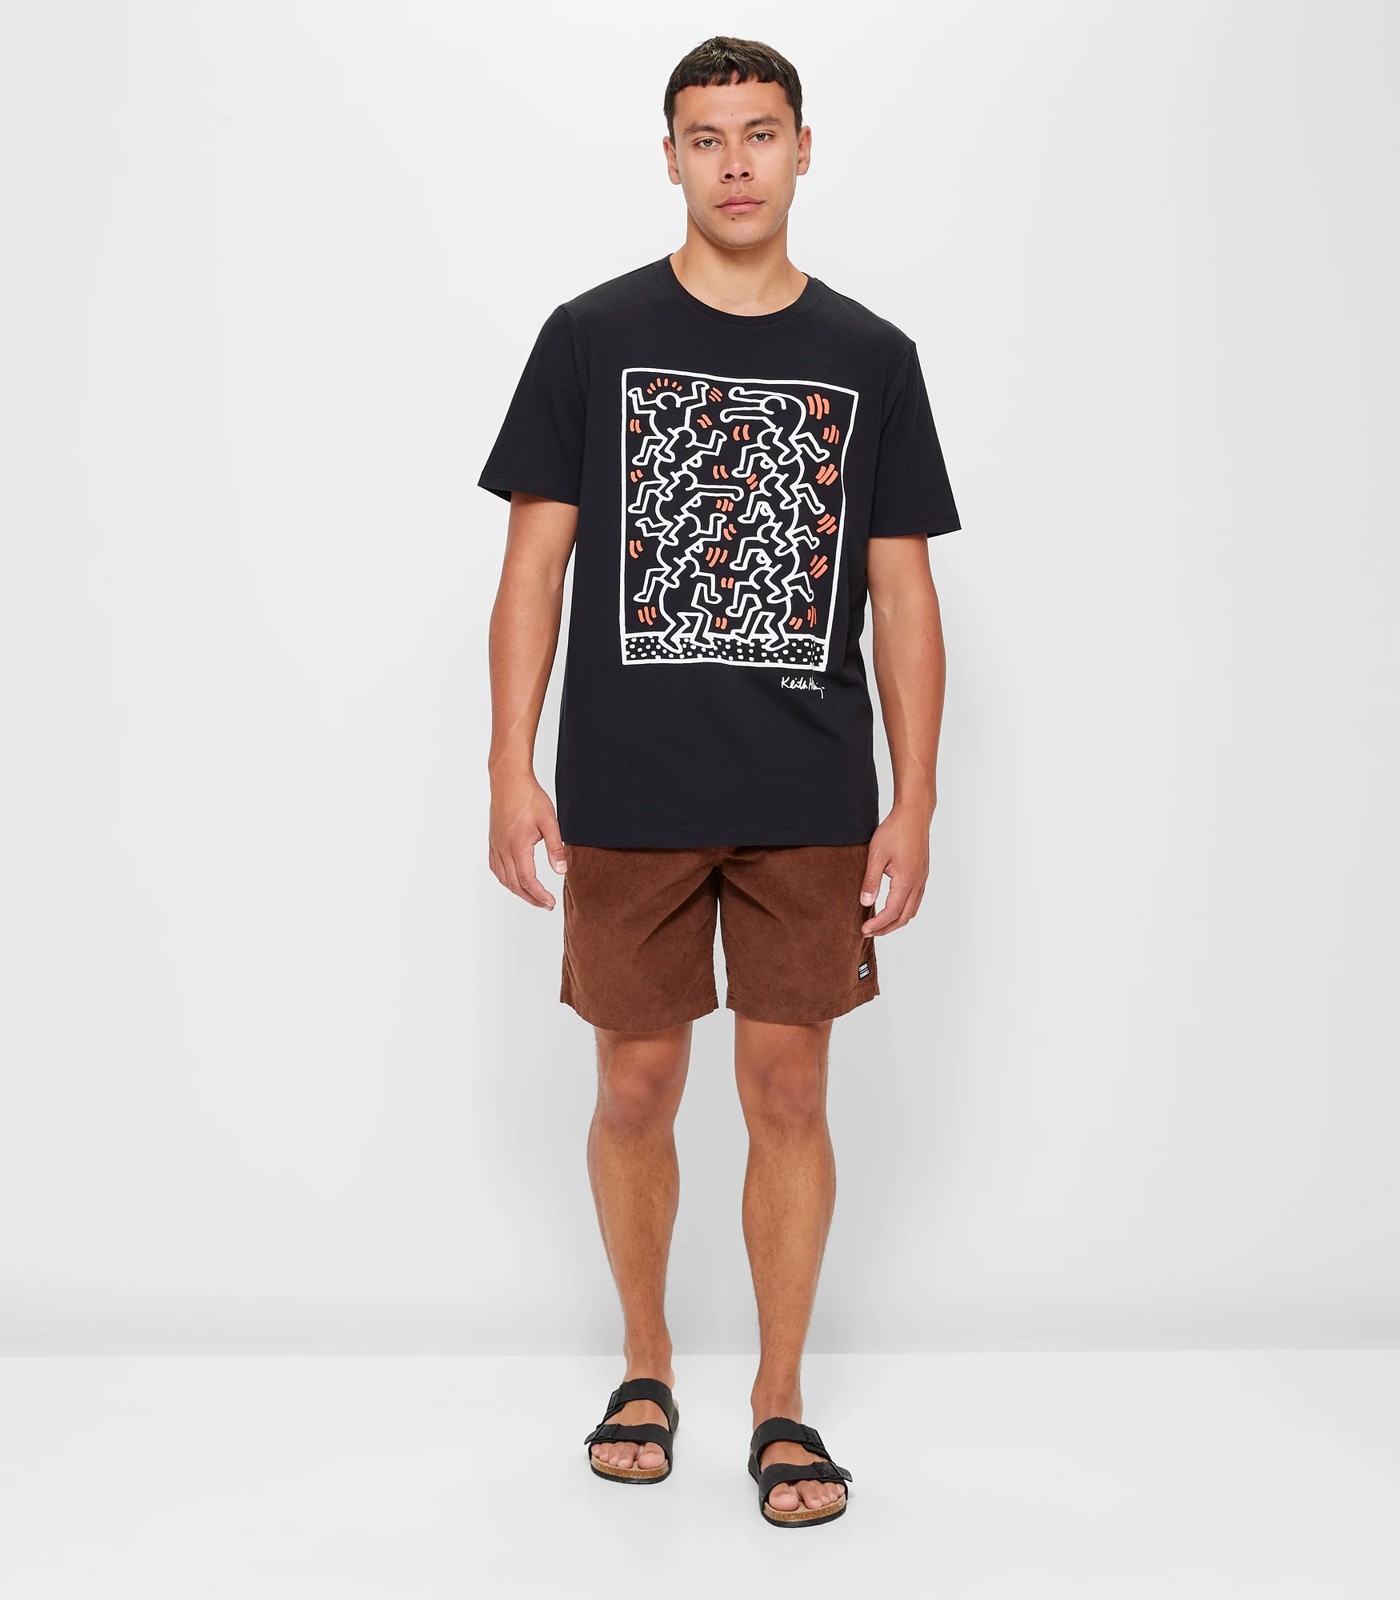 Keith Haring T-Shirt | Target Australia